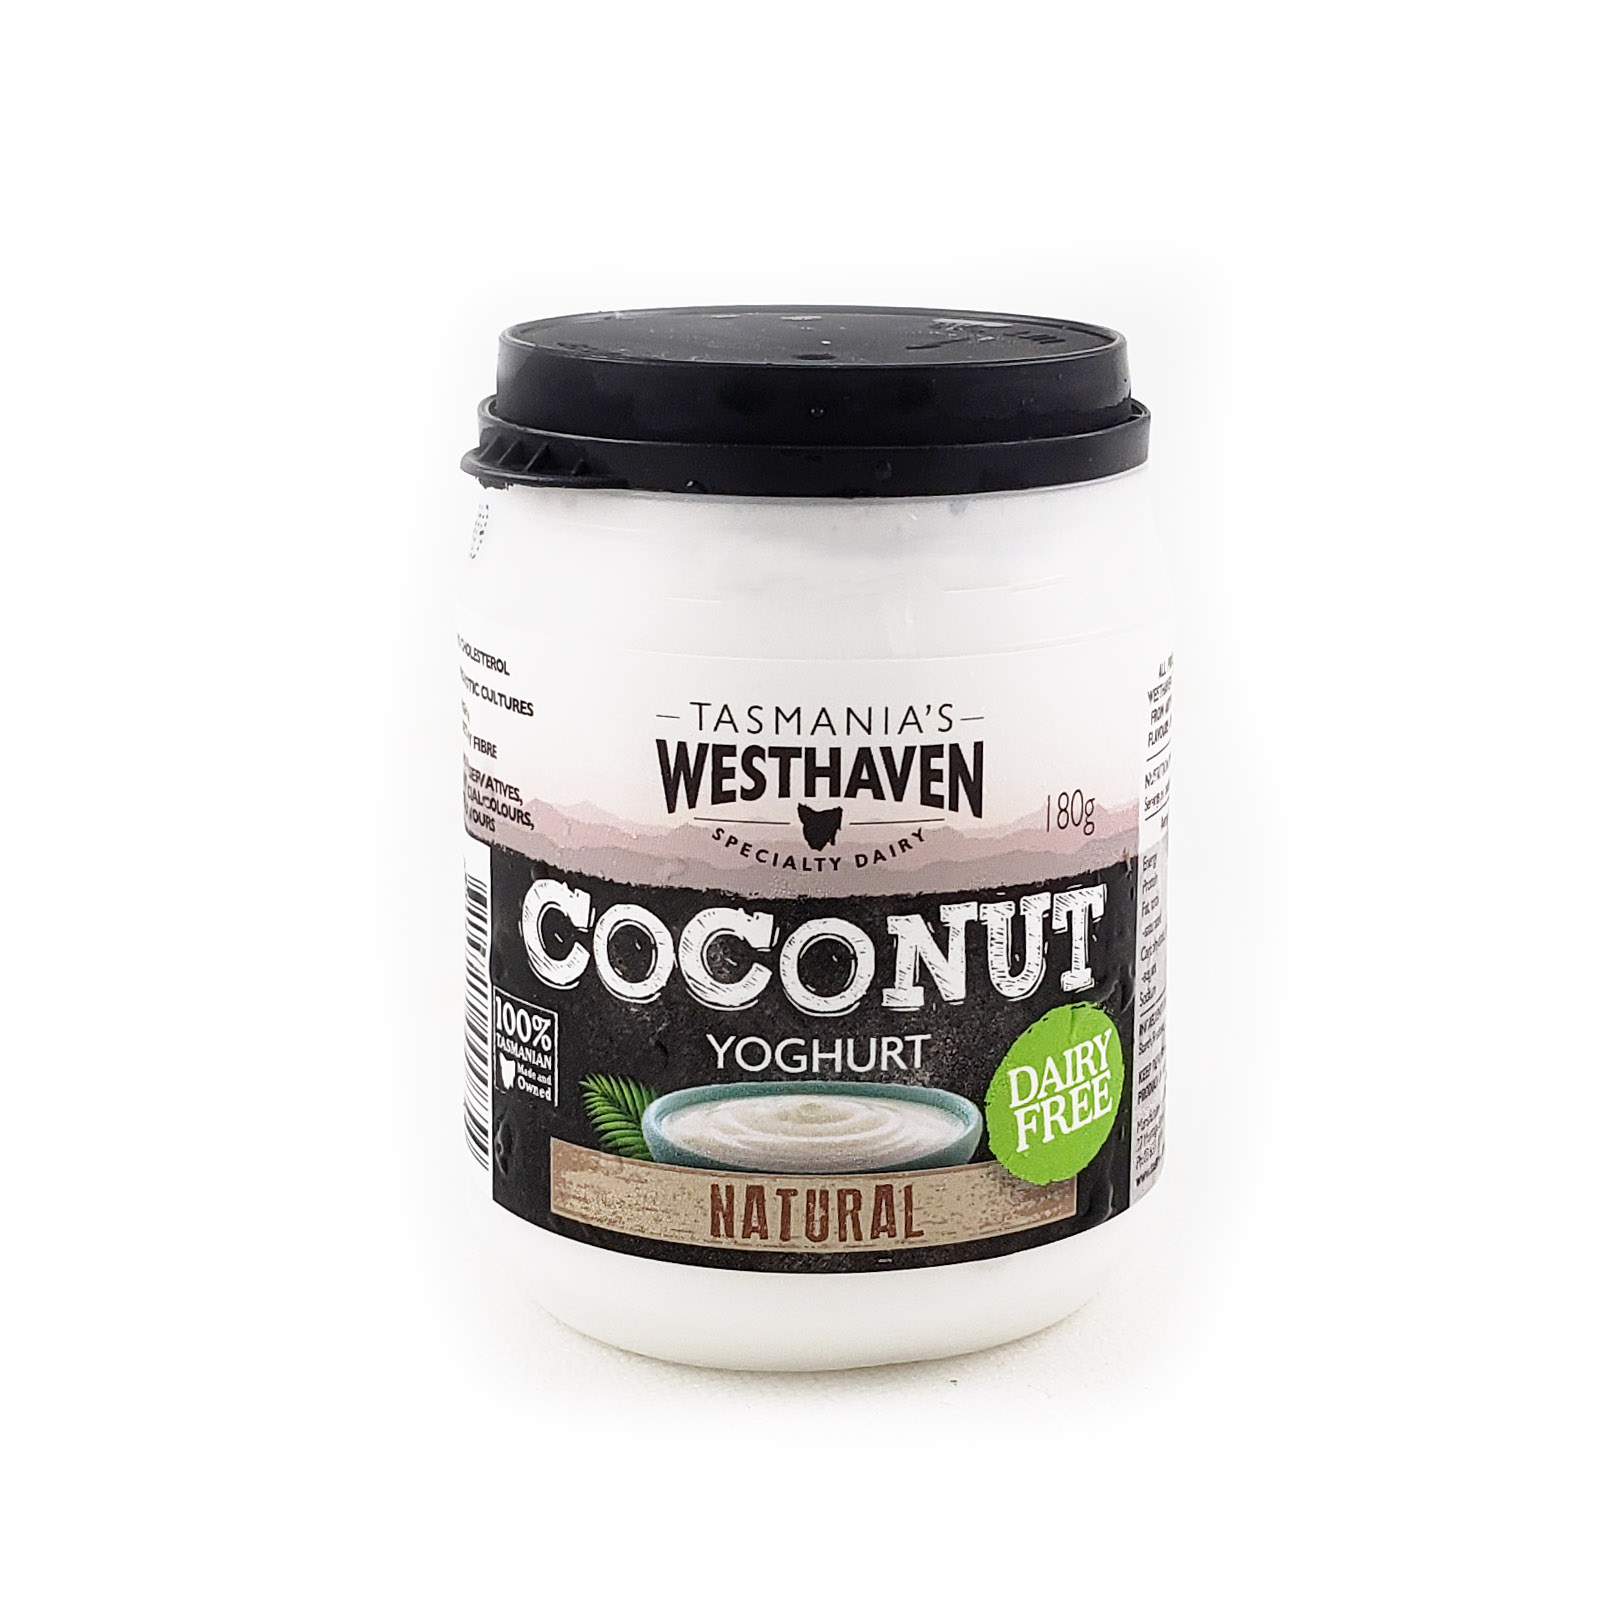 Westhaven Coconut Dairy Free Natural Yoghurt 180g - AUS*